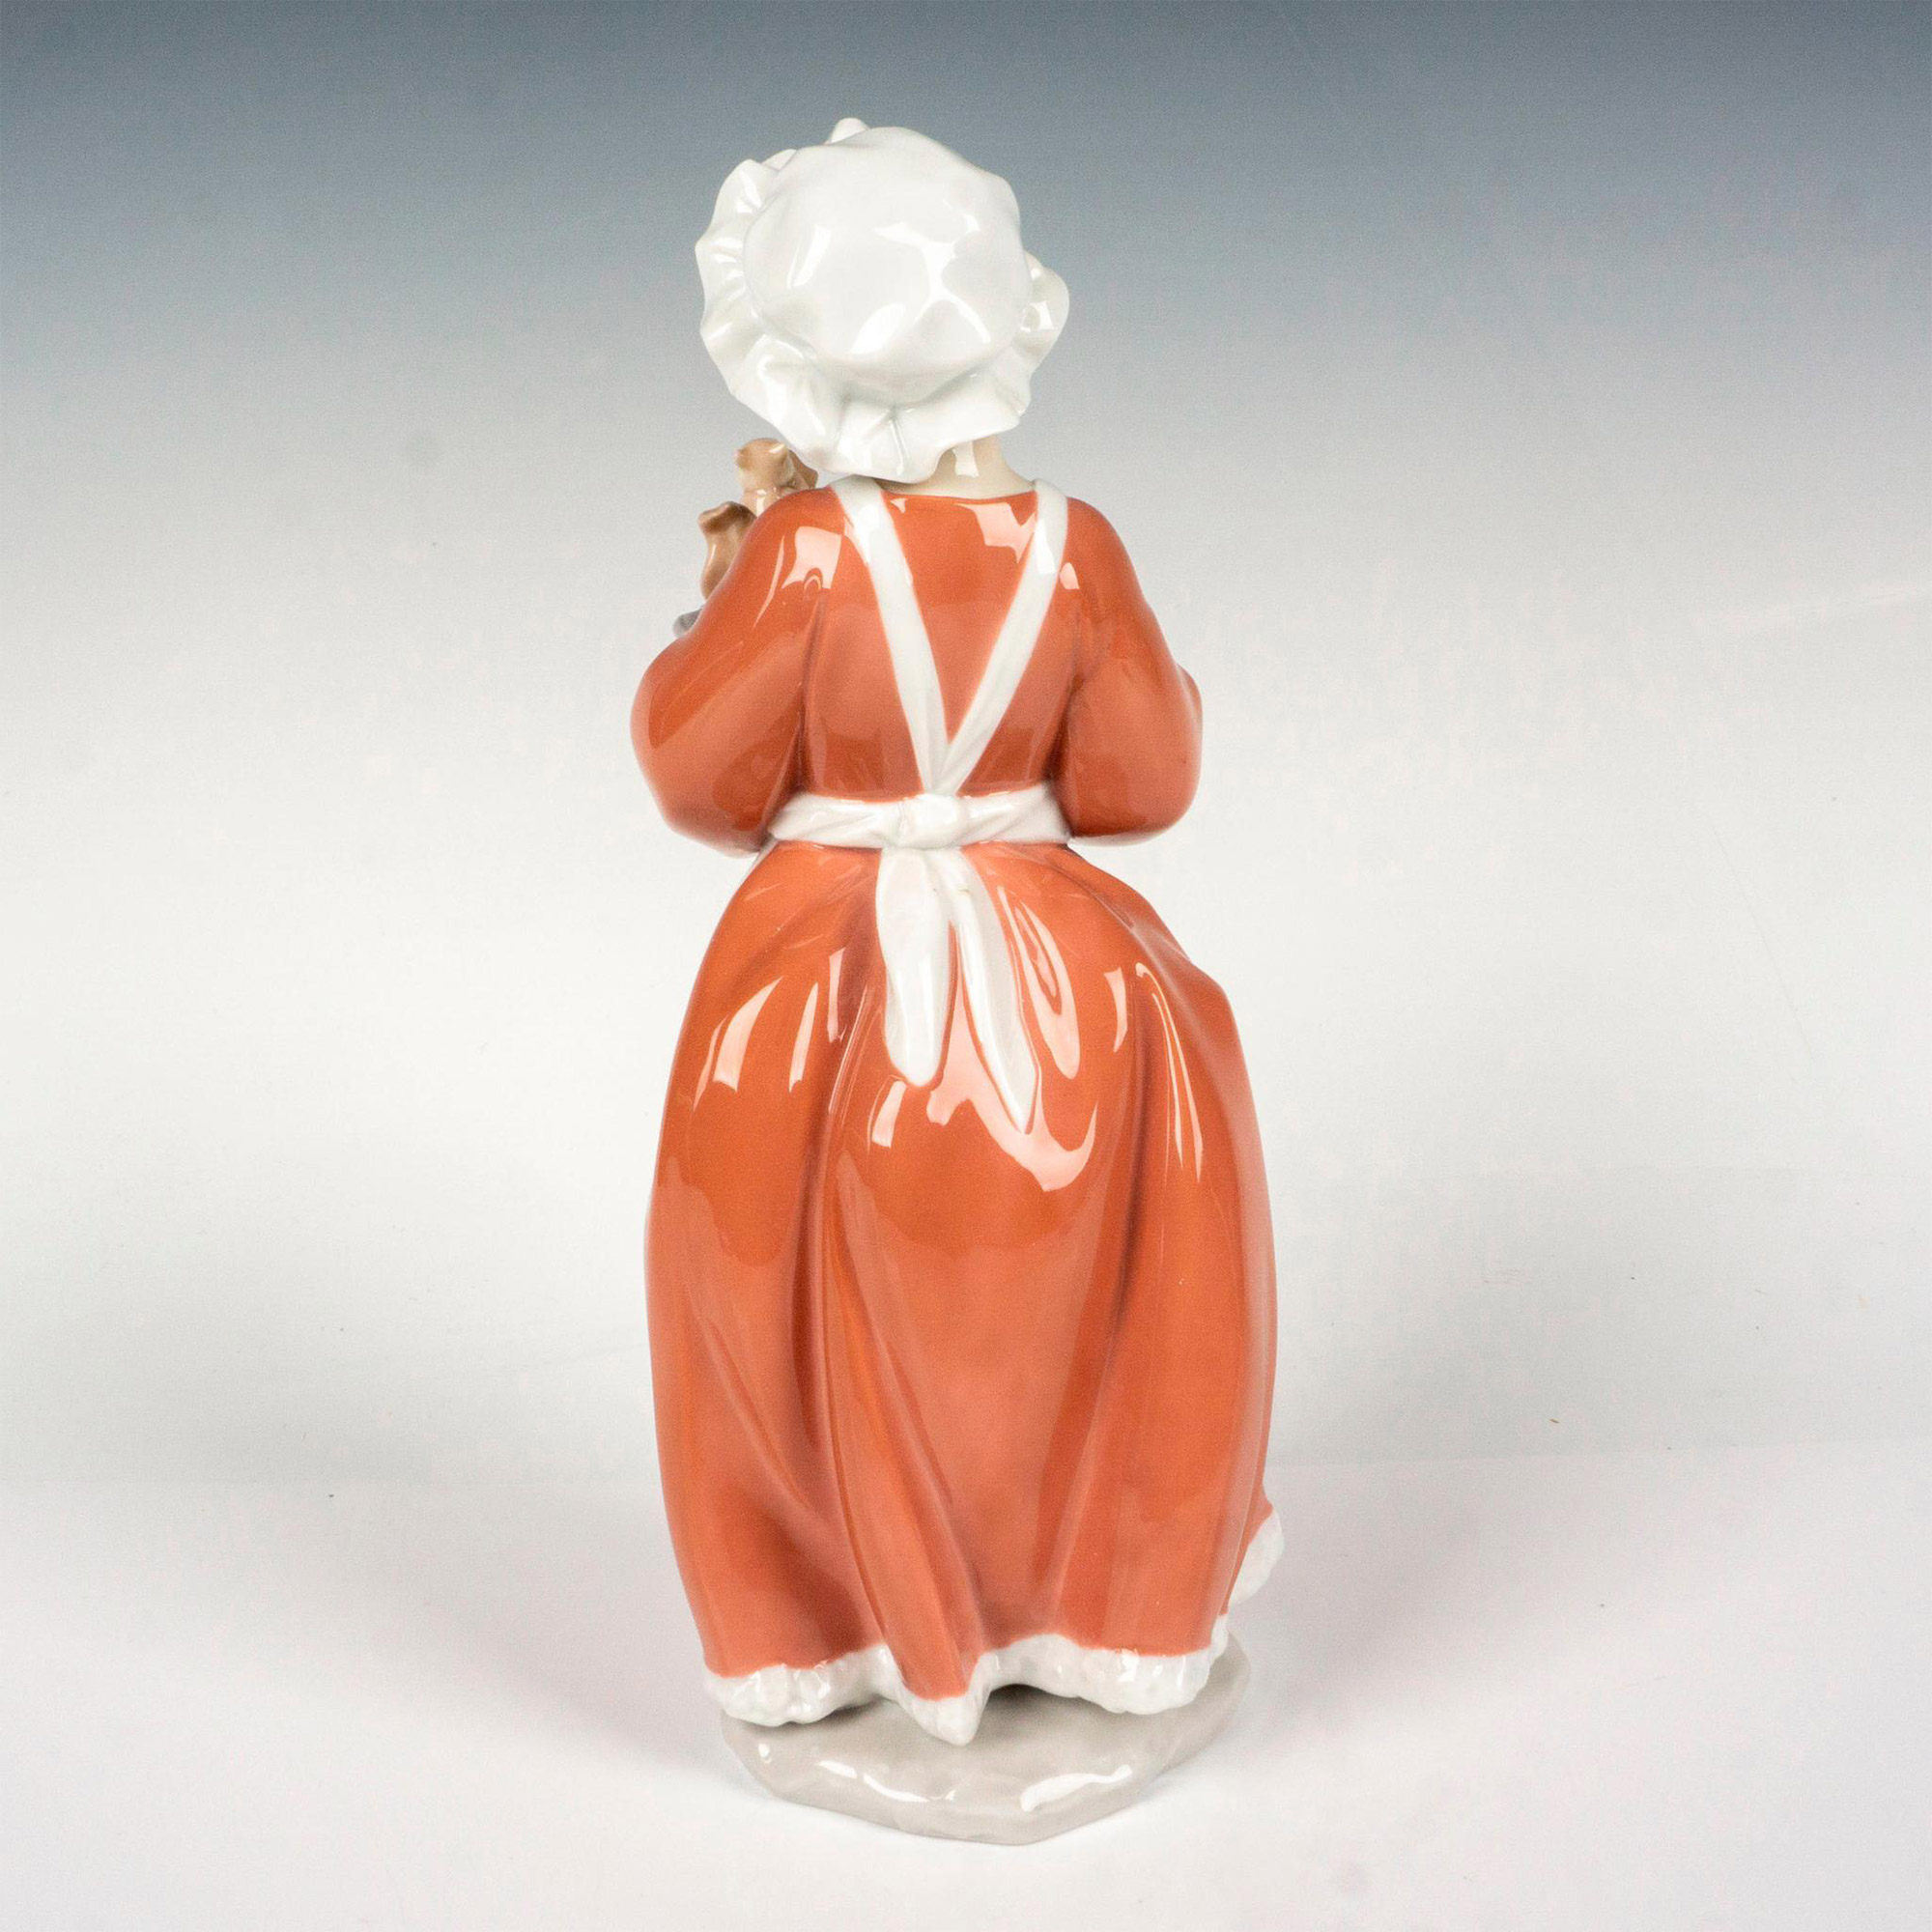 Mrs. Santa Claus 1006893 - Lladro Porcelain Figurine - Image 2 of 4